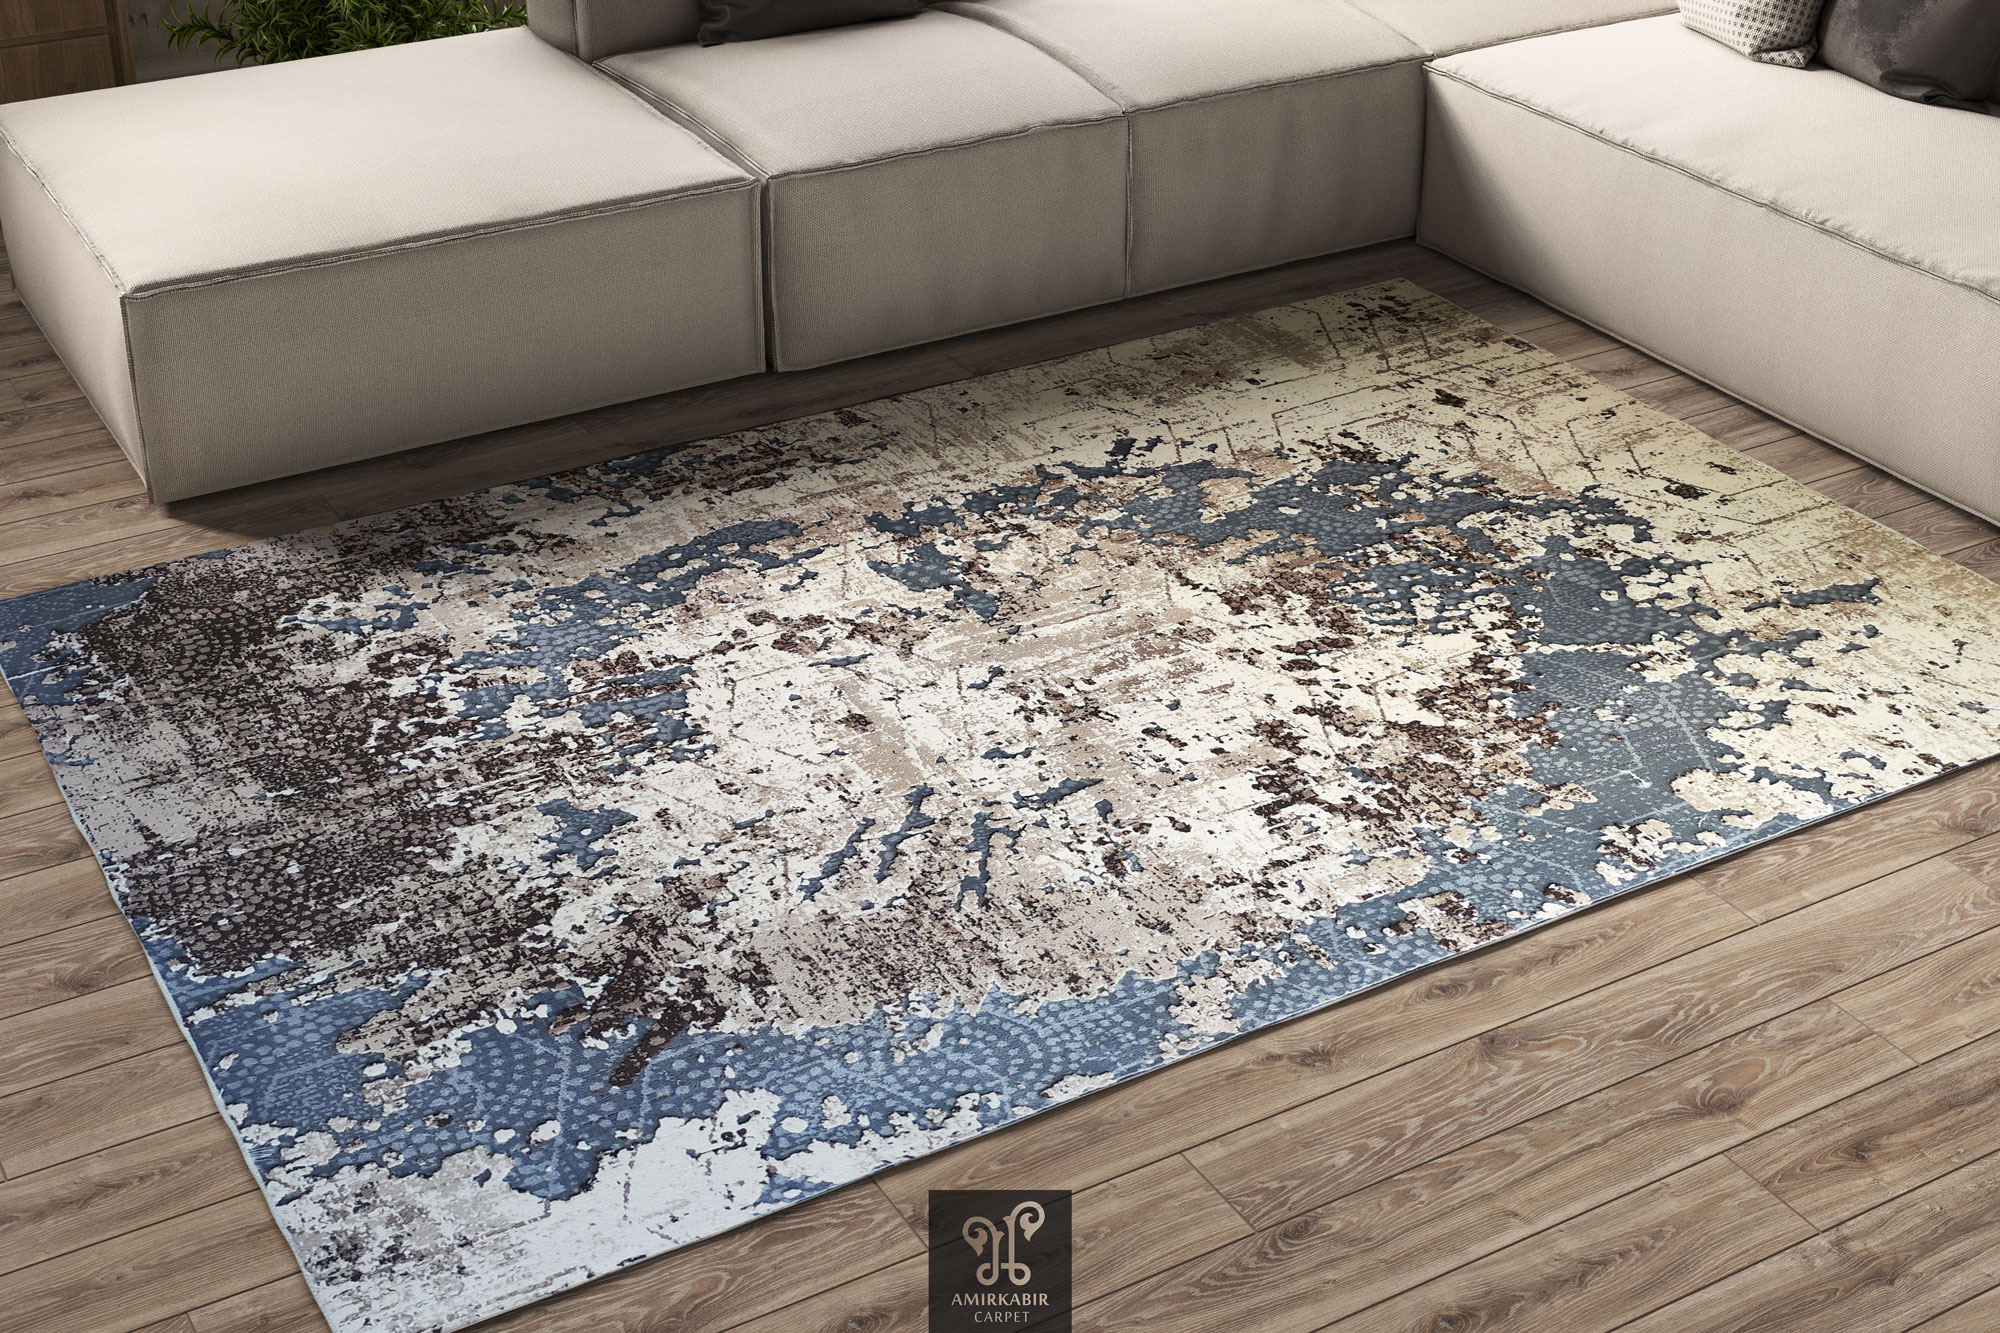 Vintage 400 reeds carpet -1300 Density RUG - Modern Carpet - Harmony Carpet 1107 carpet code